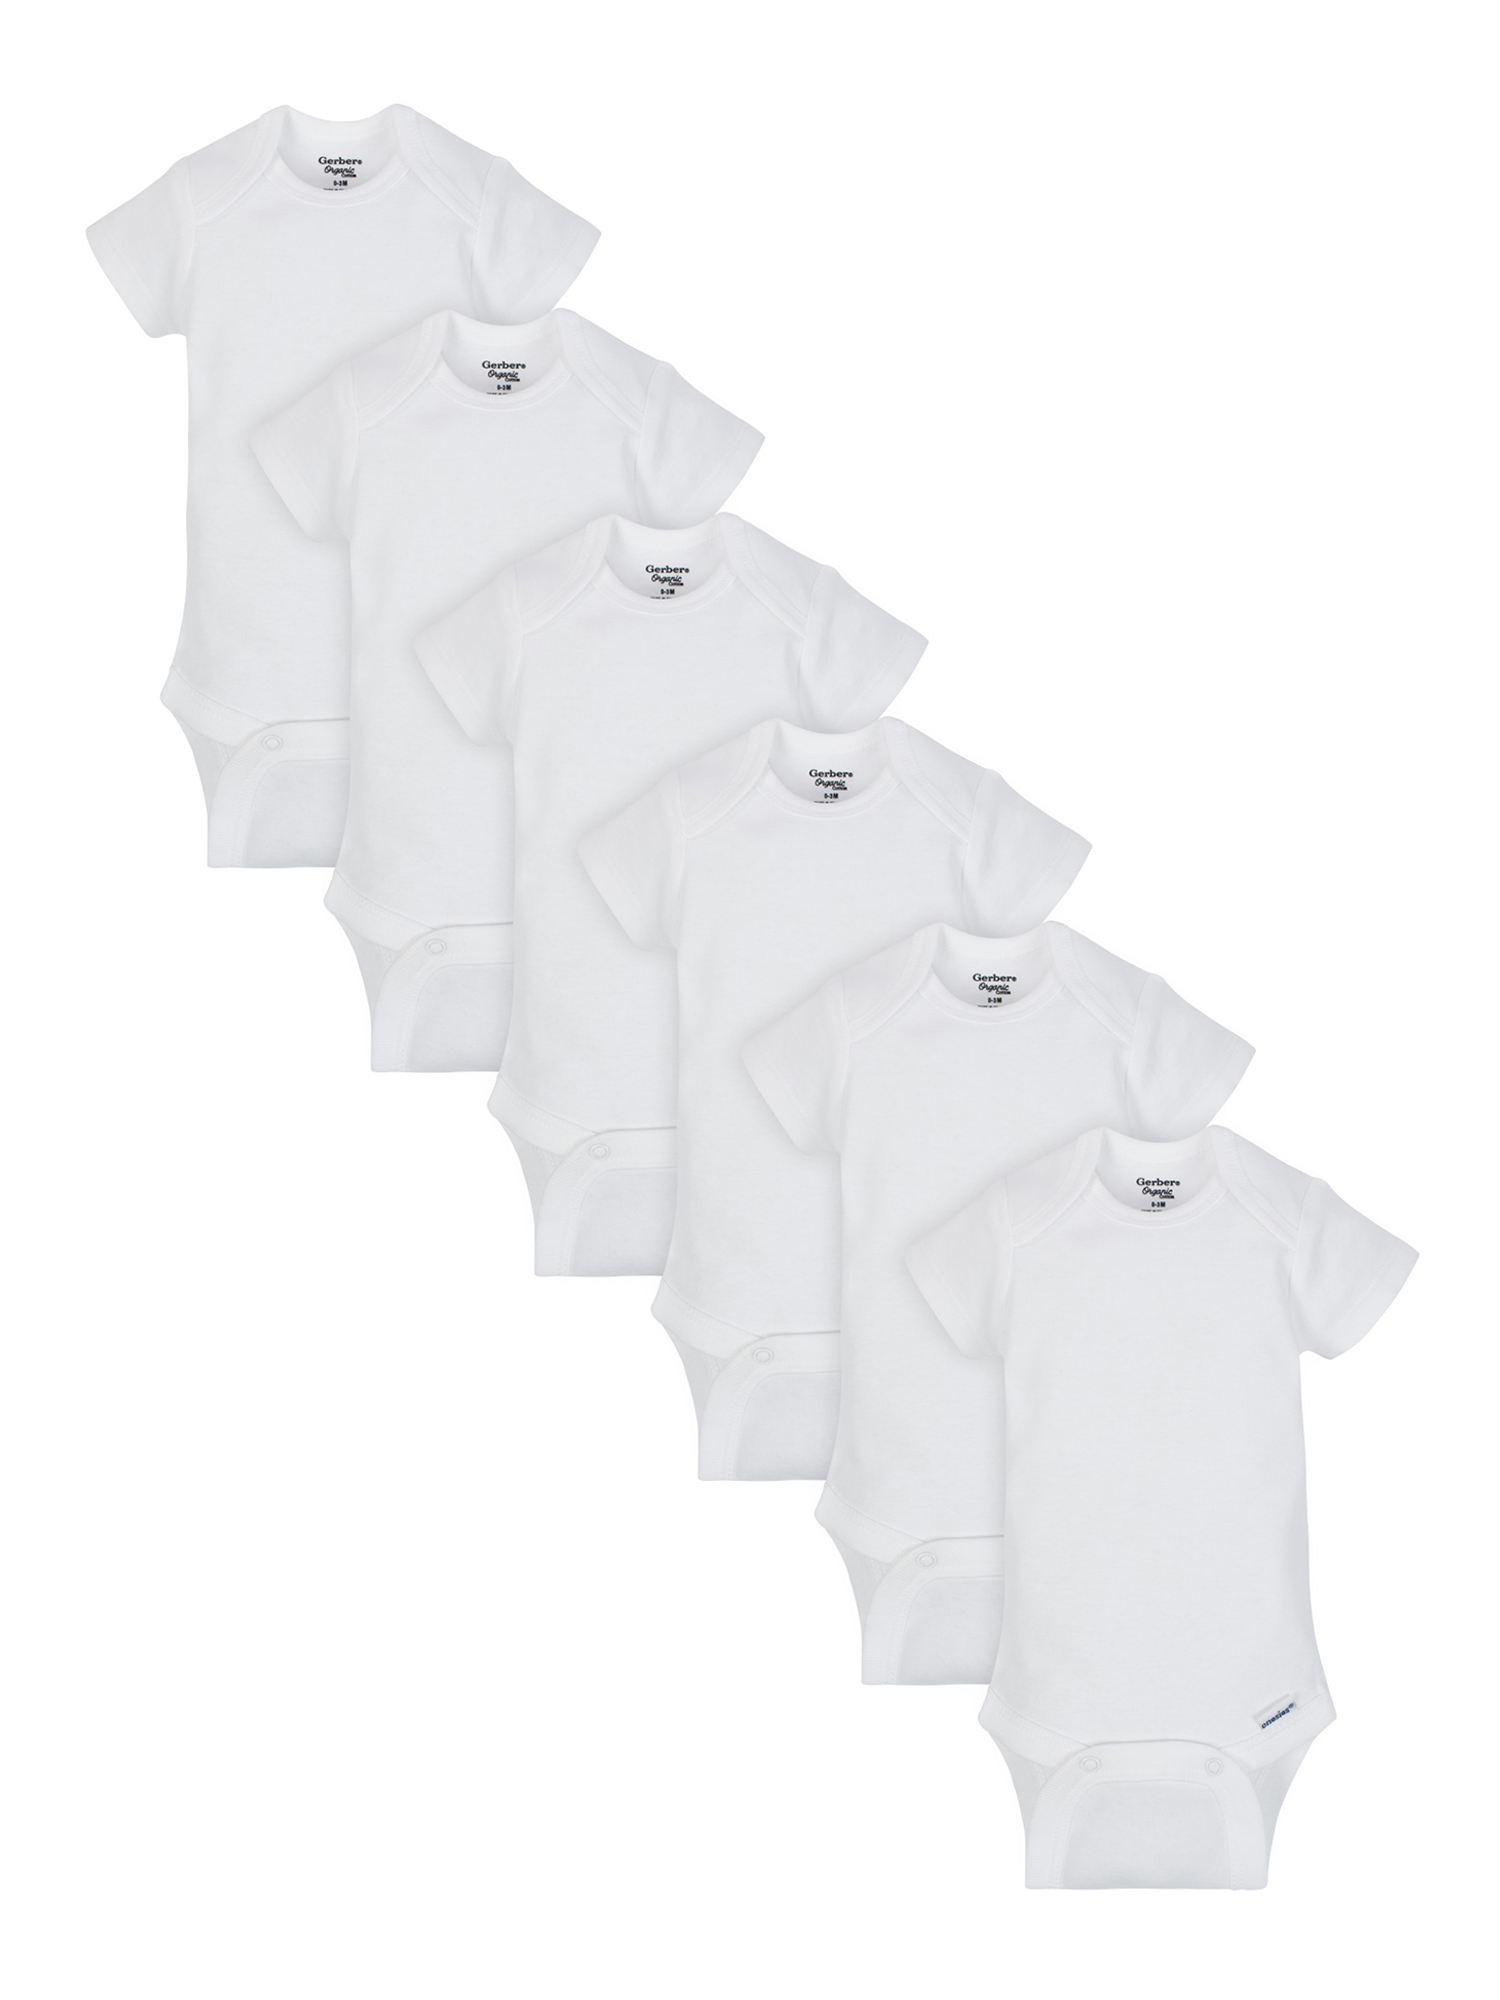 Gerber Baby Boy or Girl Gender Neutral Organic White Onesies Short Sleeve Bodysuits, 6-Pack - image 1 of 13